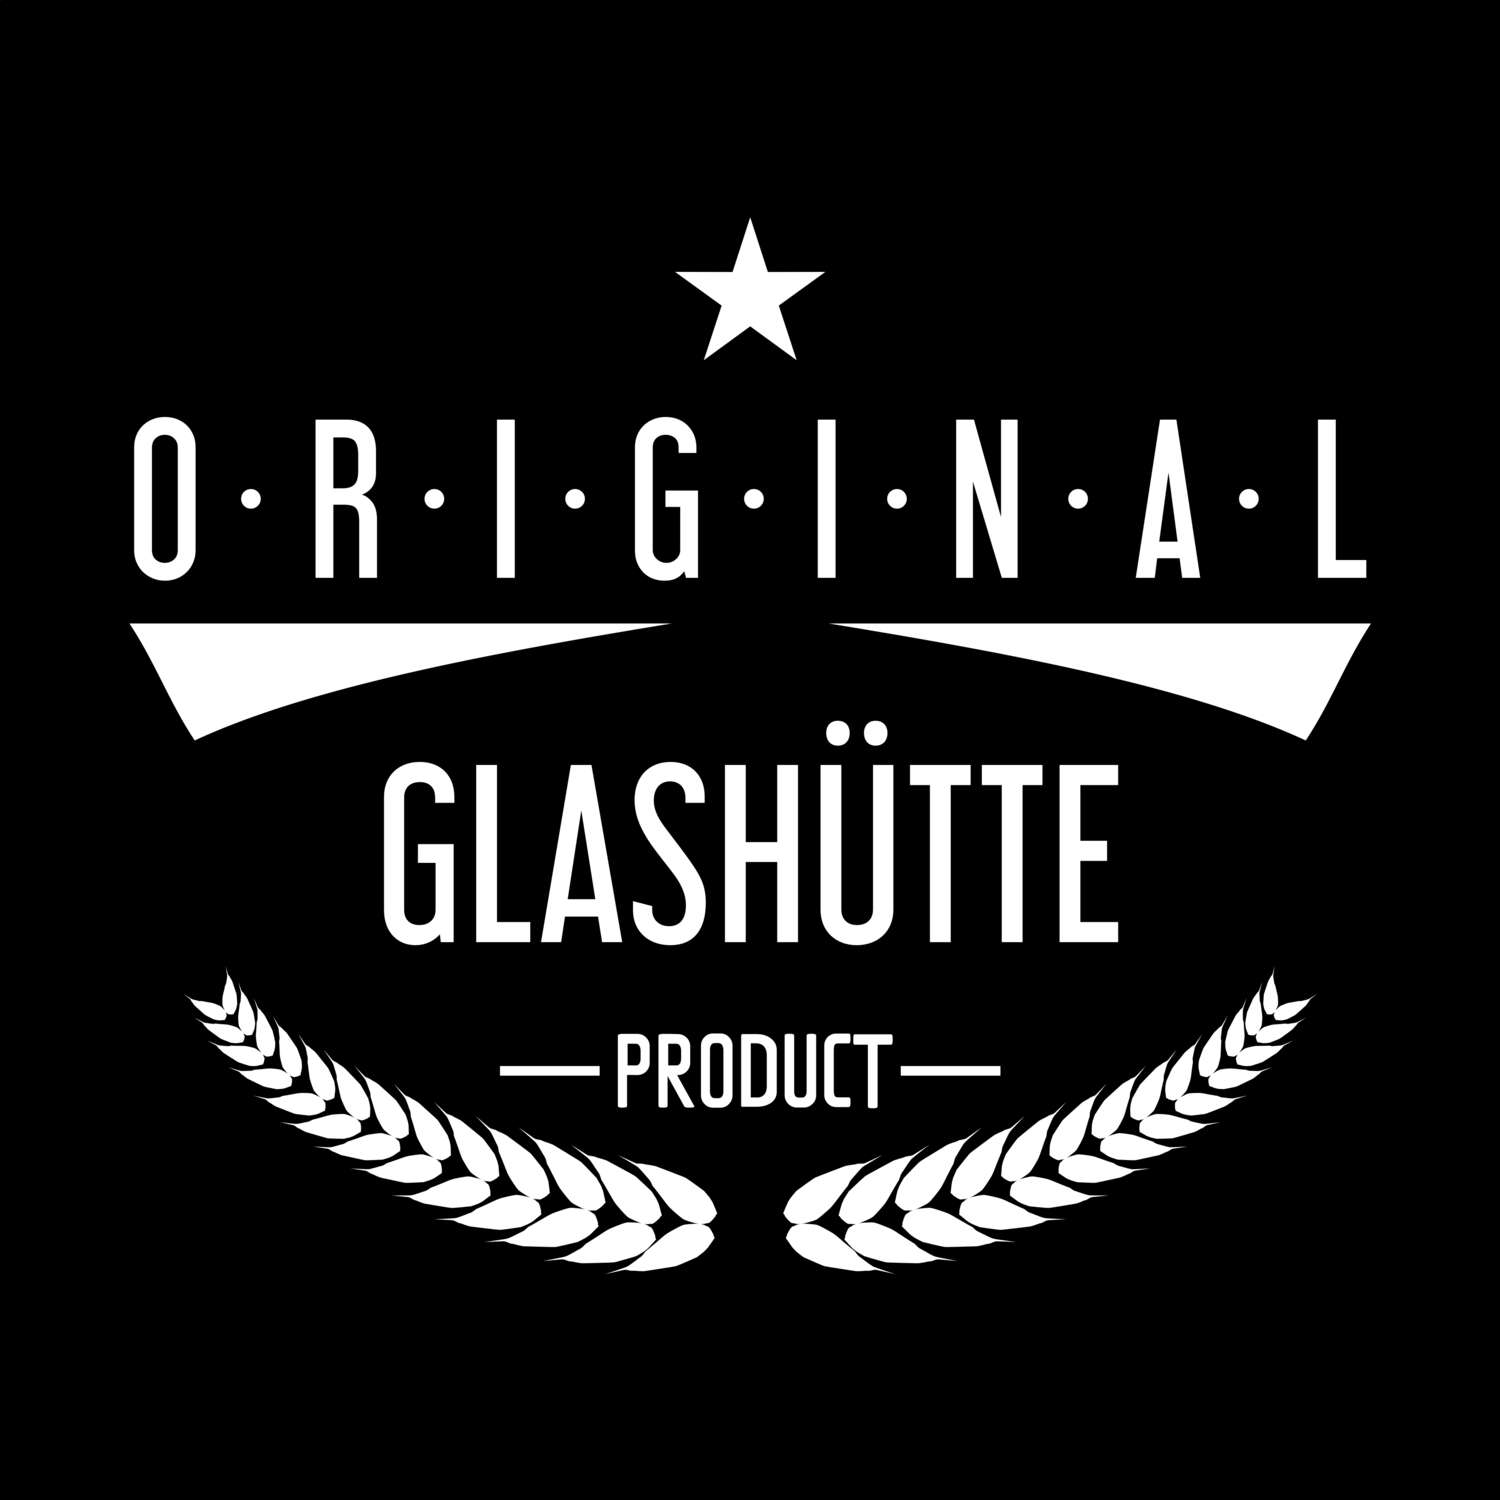 Glashütte T-Shirt »Original Product«